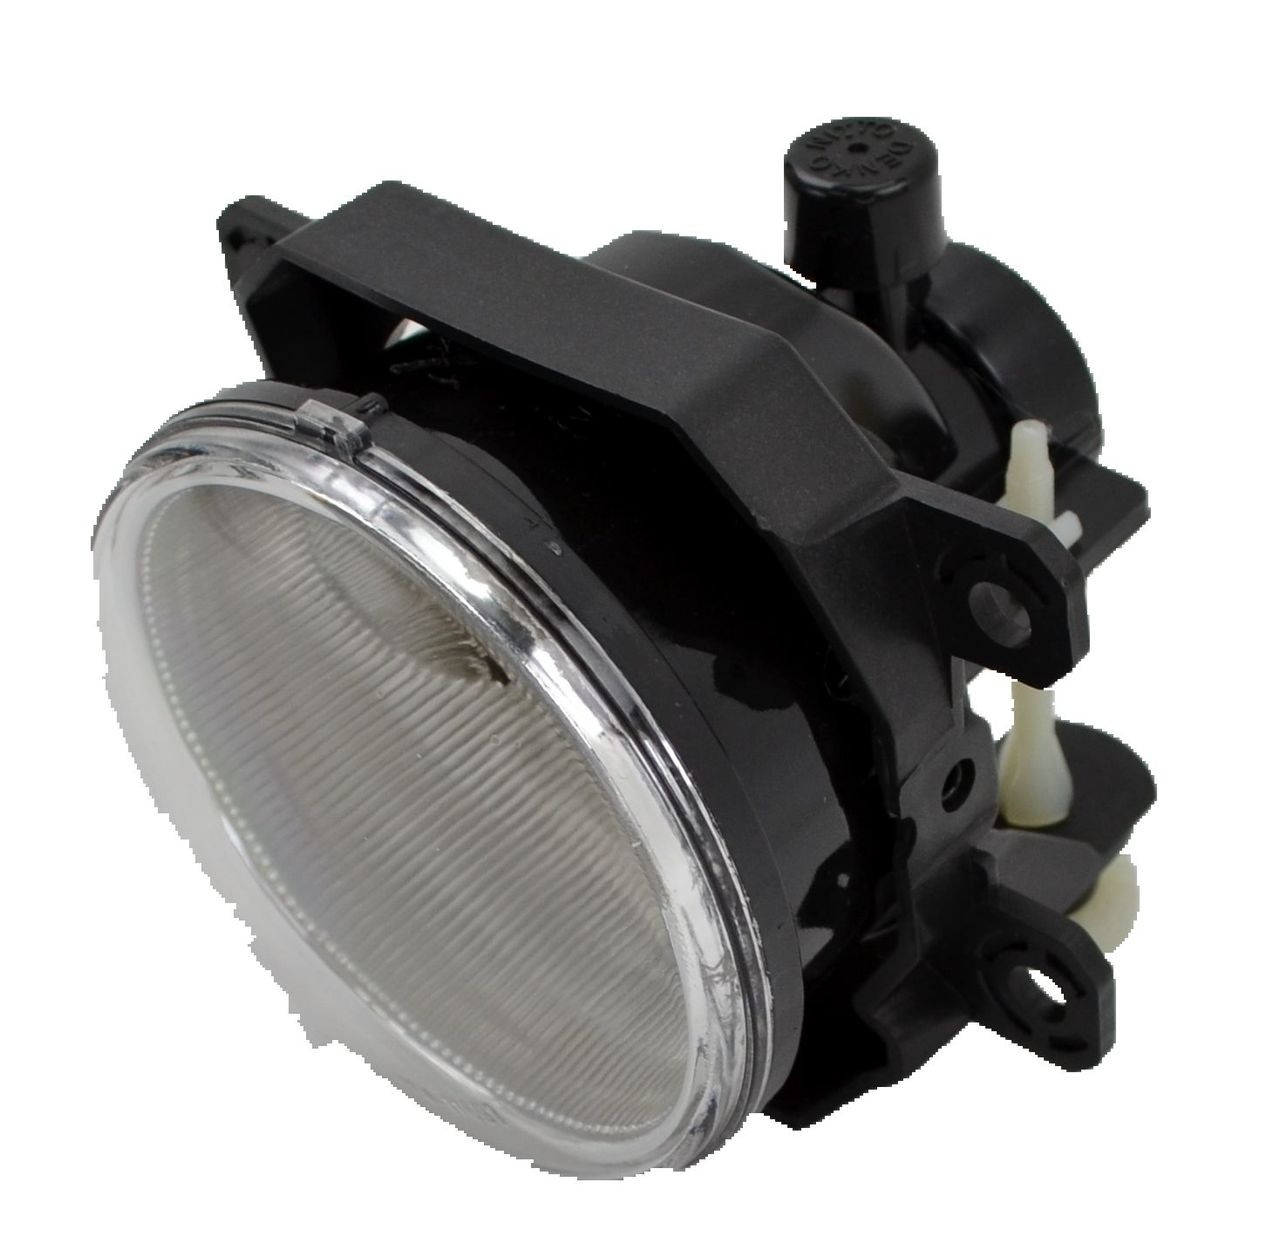 Fog light for Subaru Forester/Liberty/Outback 2012-2016 New Left Spot Lamp 13 14 15